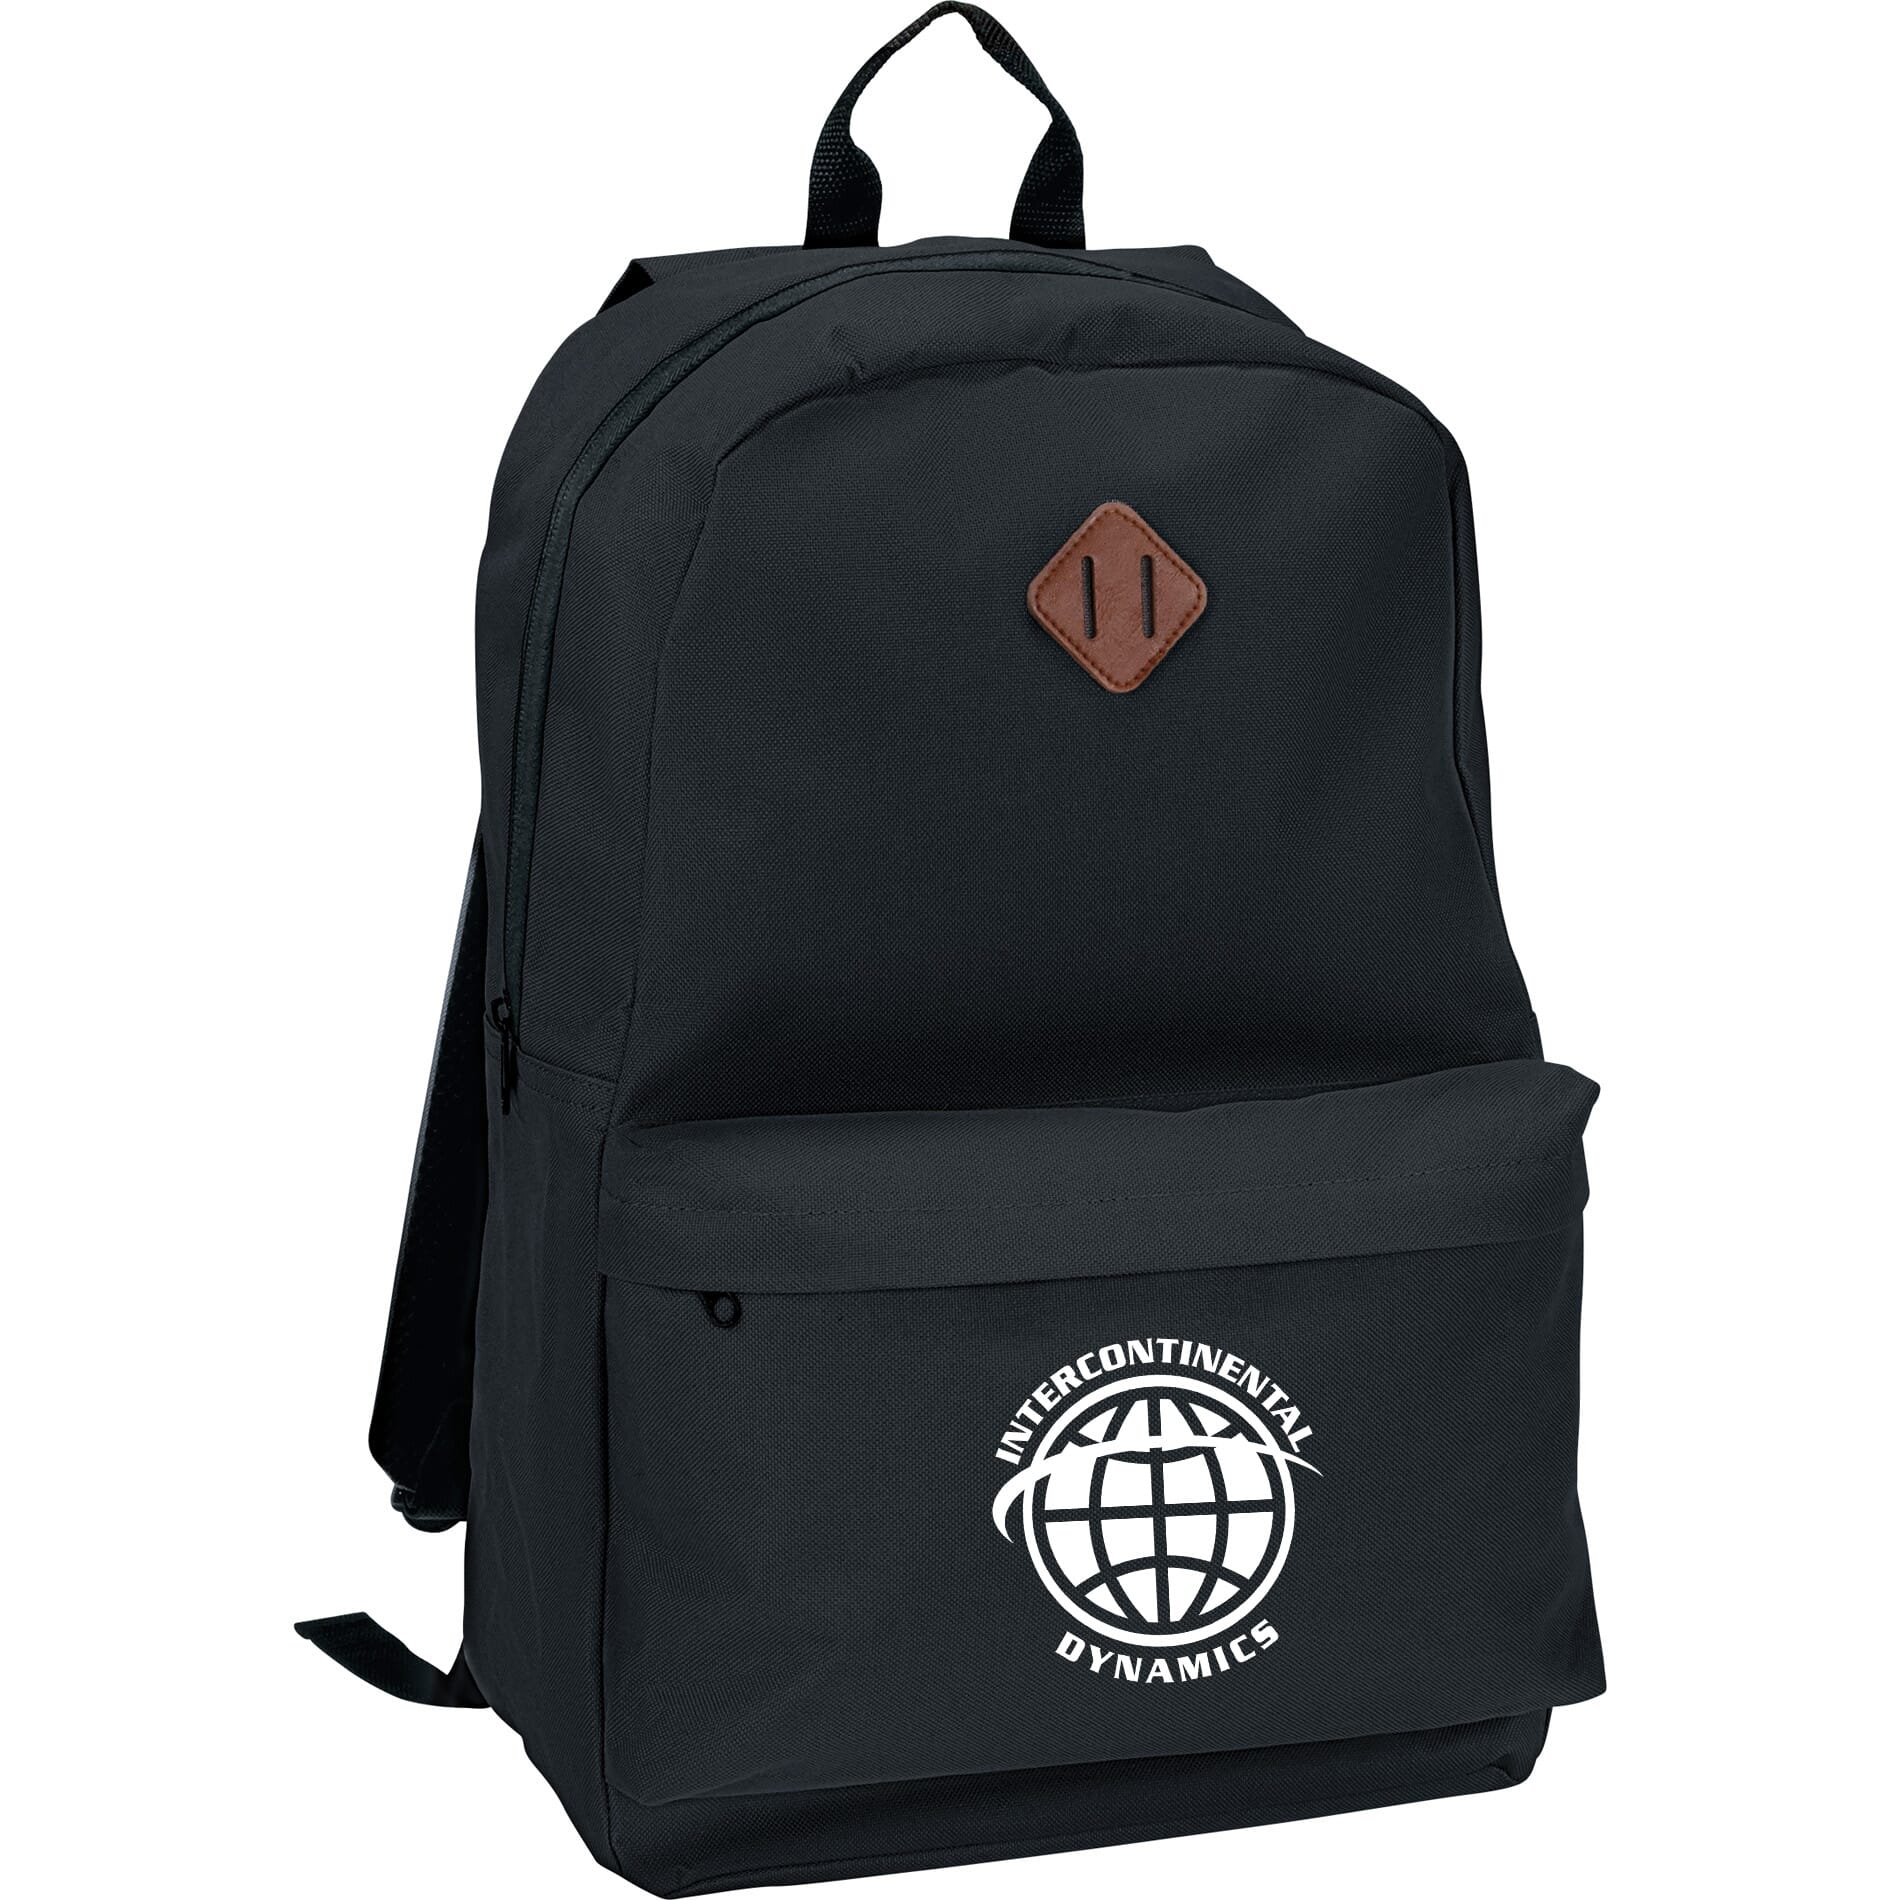 Stratta 15” Computer Backpack